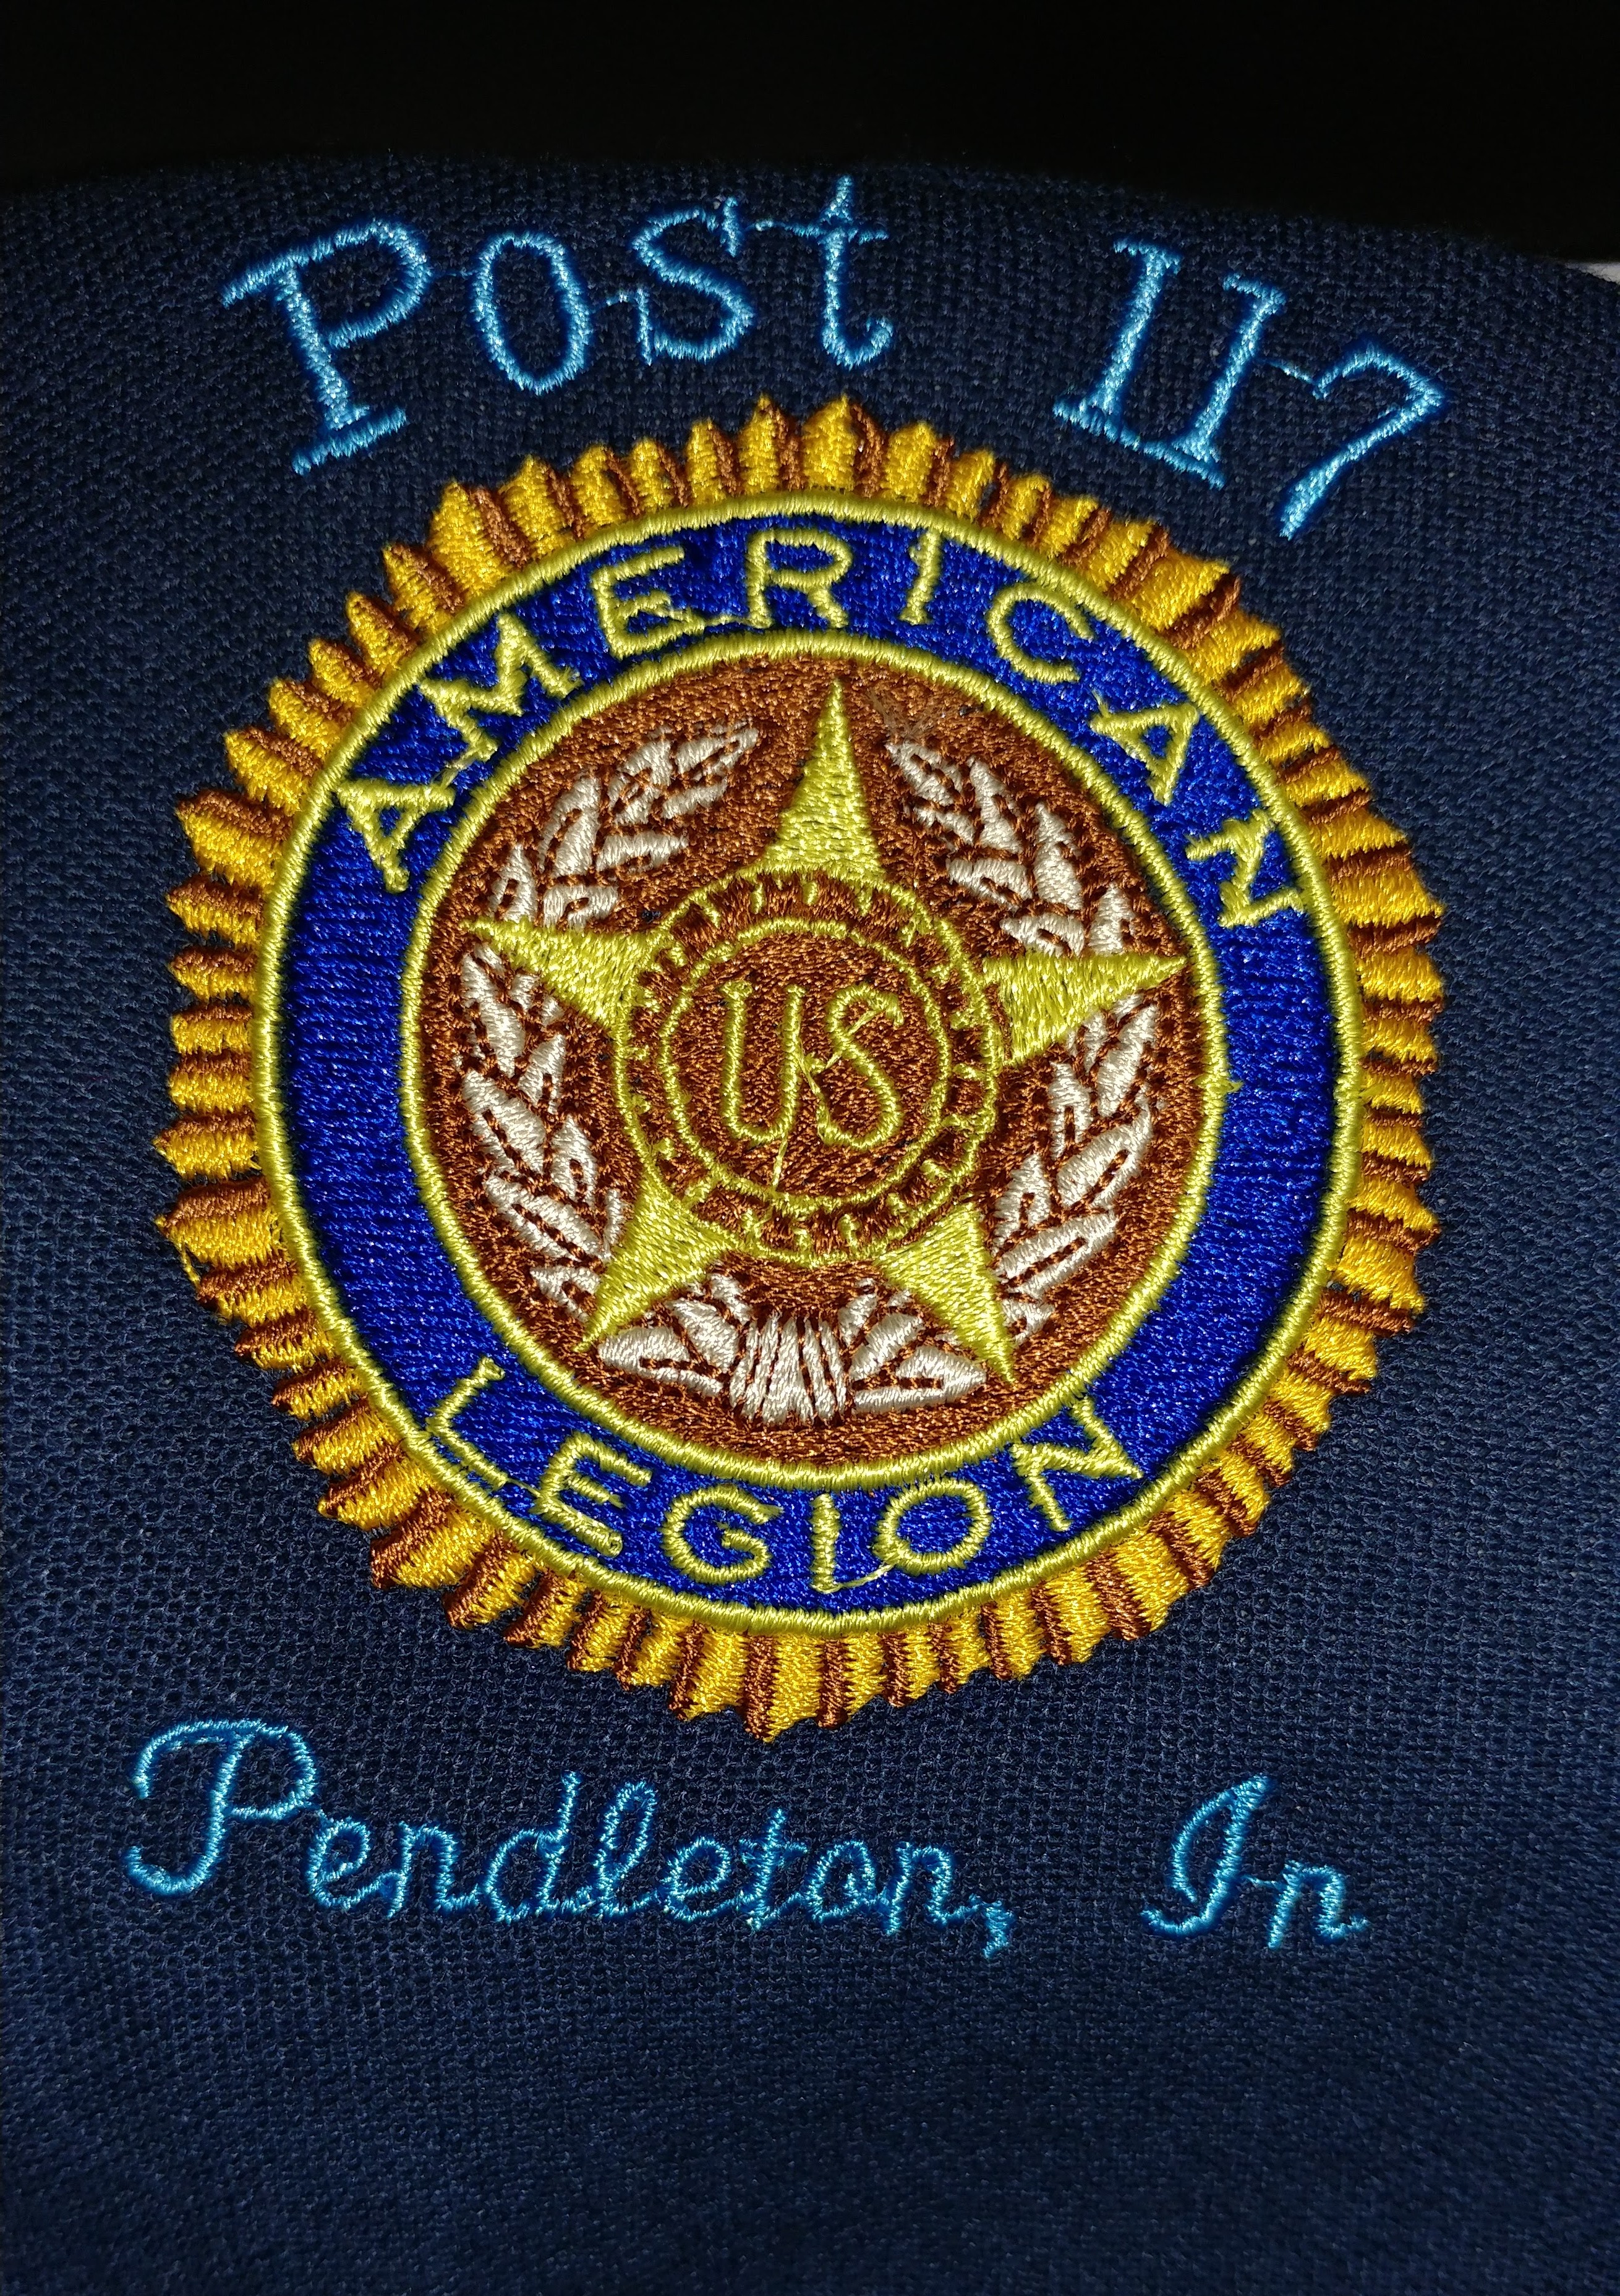 American Legion Emblem